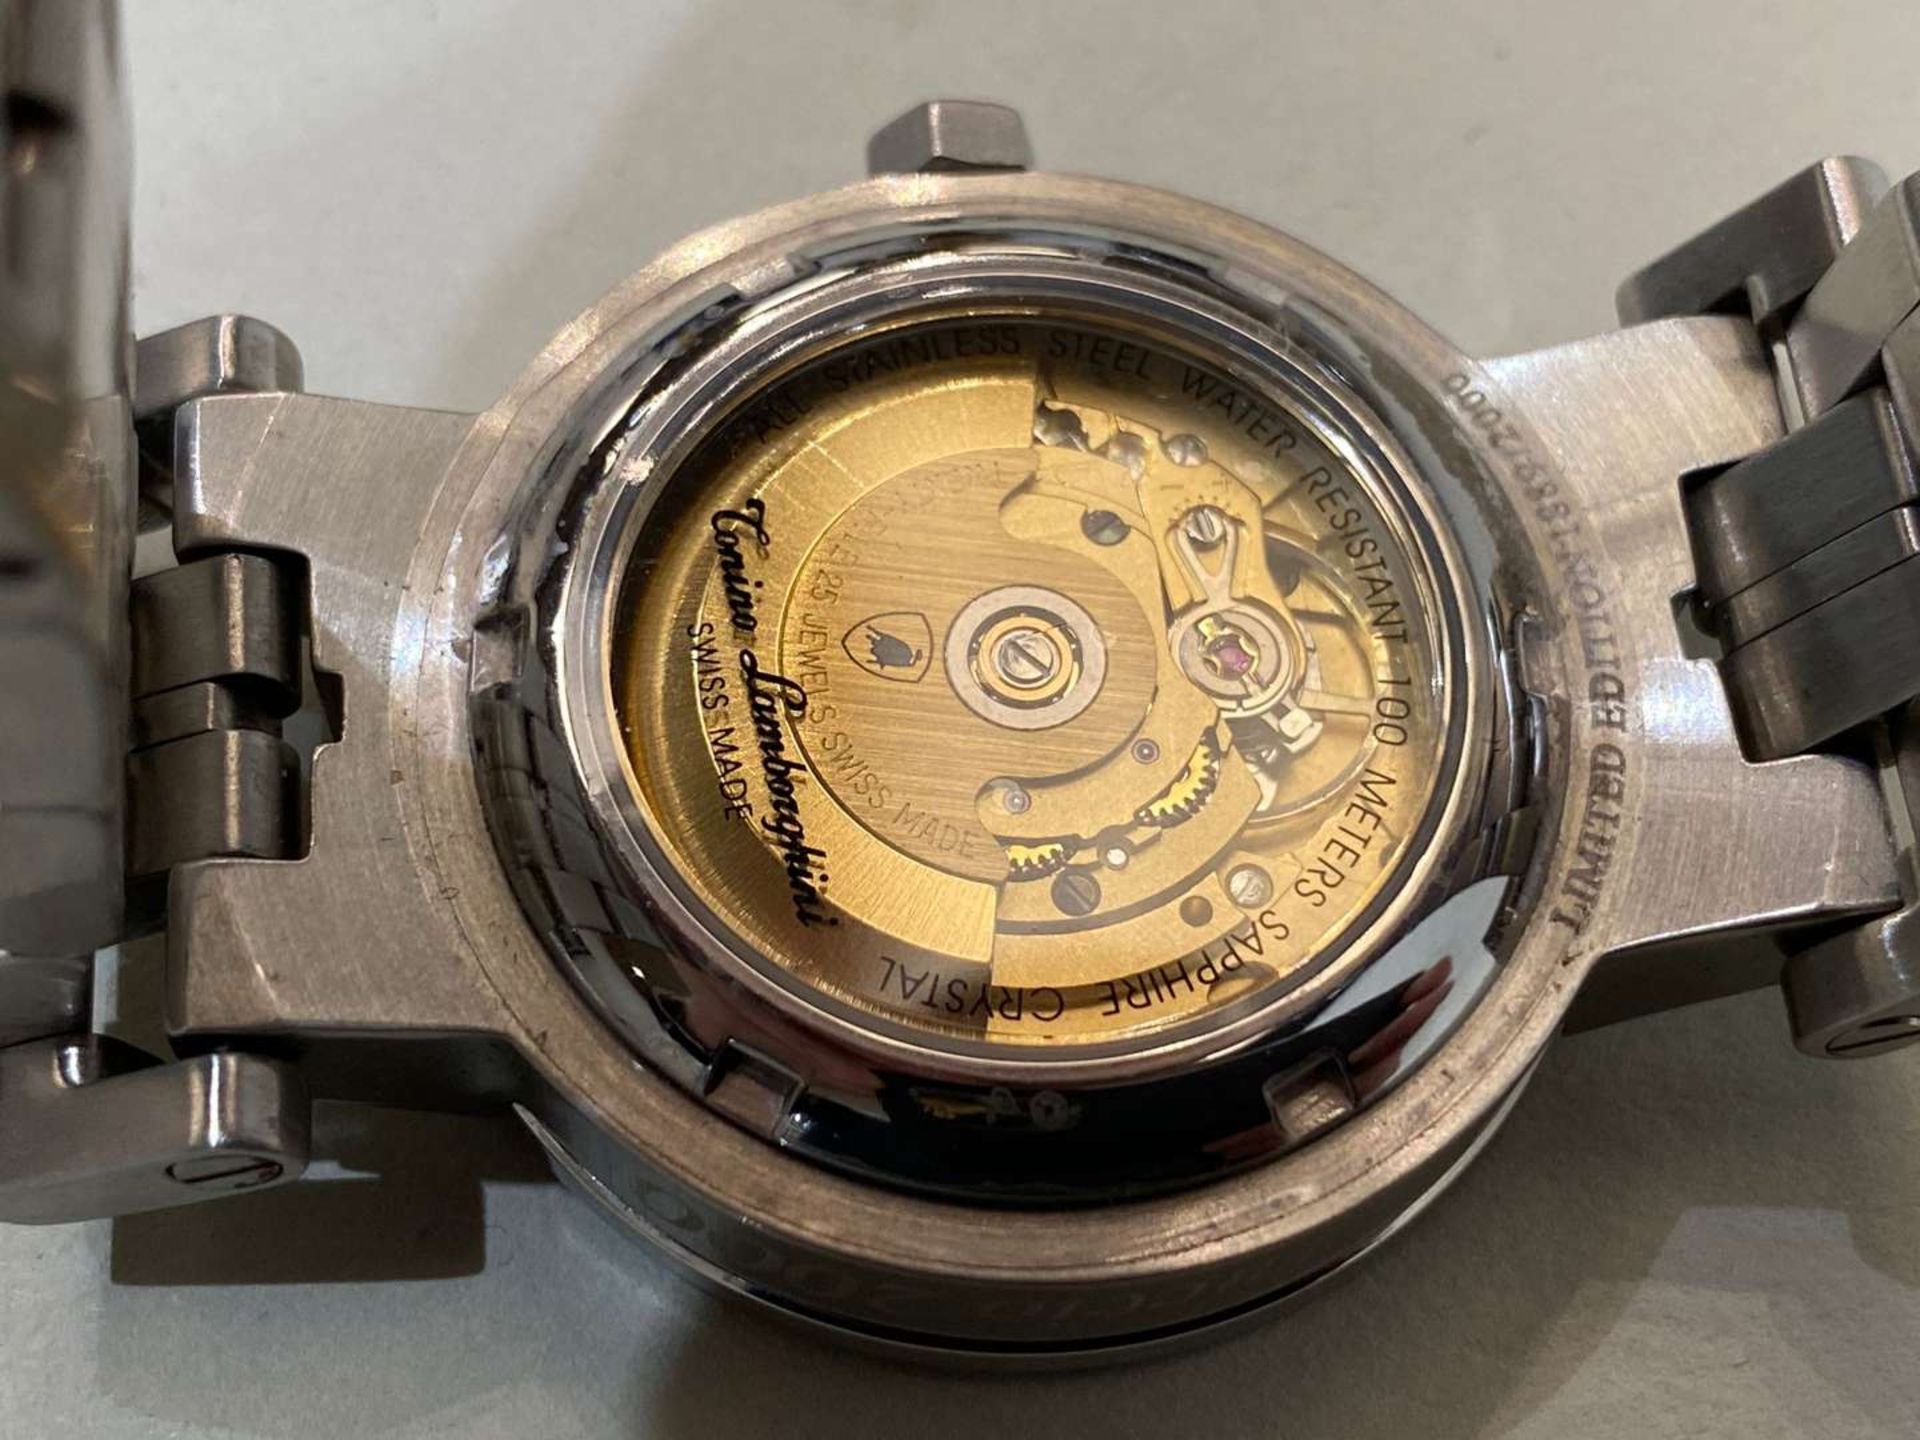 TONINO LAMBORGHINI, FERRUCCIO 2000, a stainless steel, automatic, centre seconds, calendar watch, - Image 5 of 10